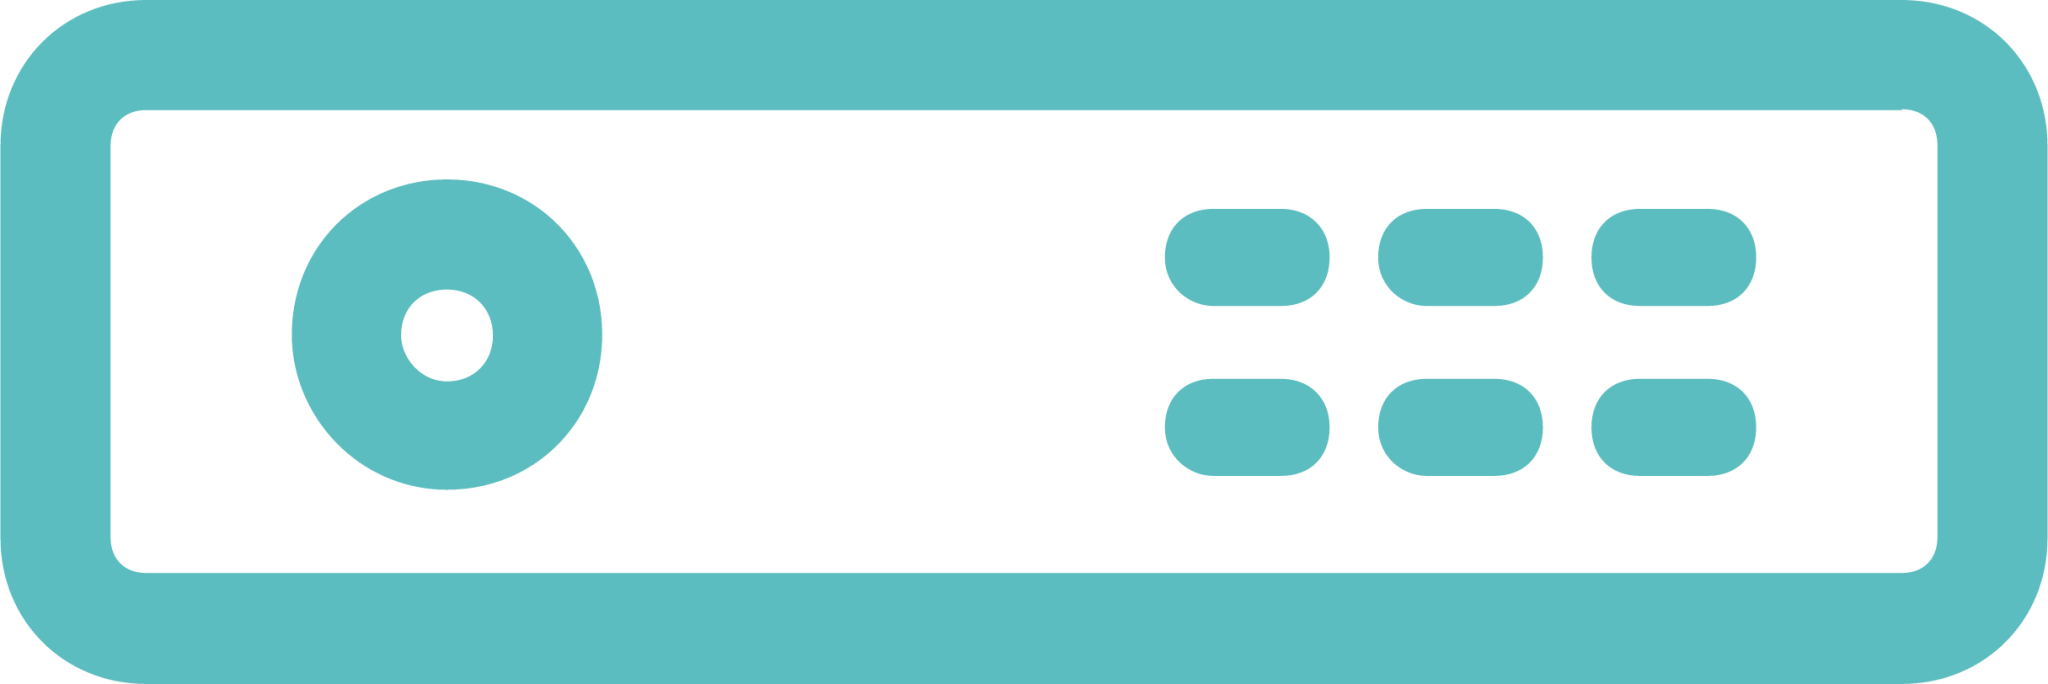 server (blue) icon